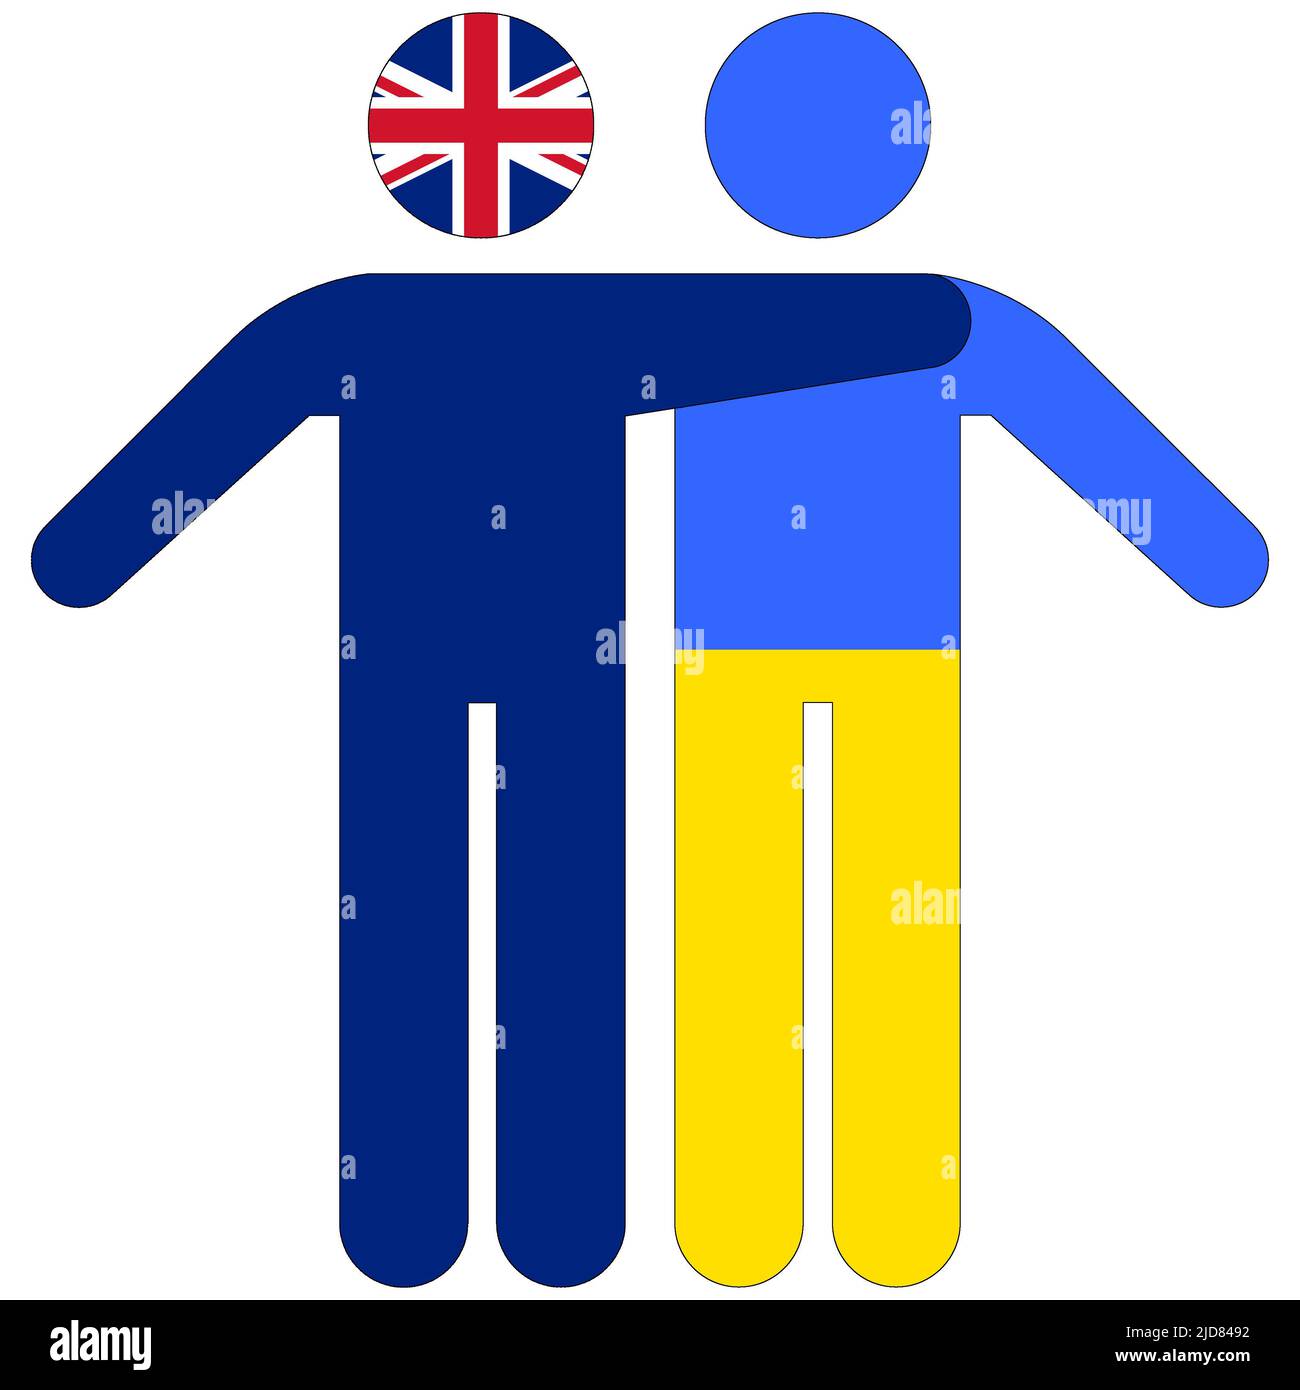 UK - Ukraine : friendship concept on white background Stock Photo